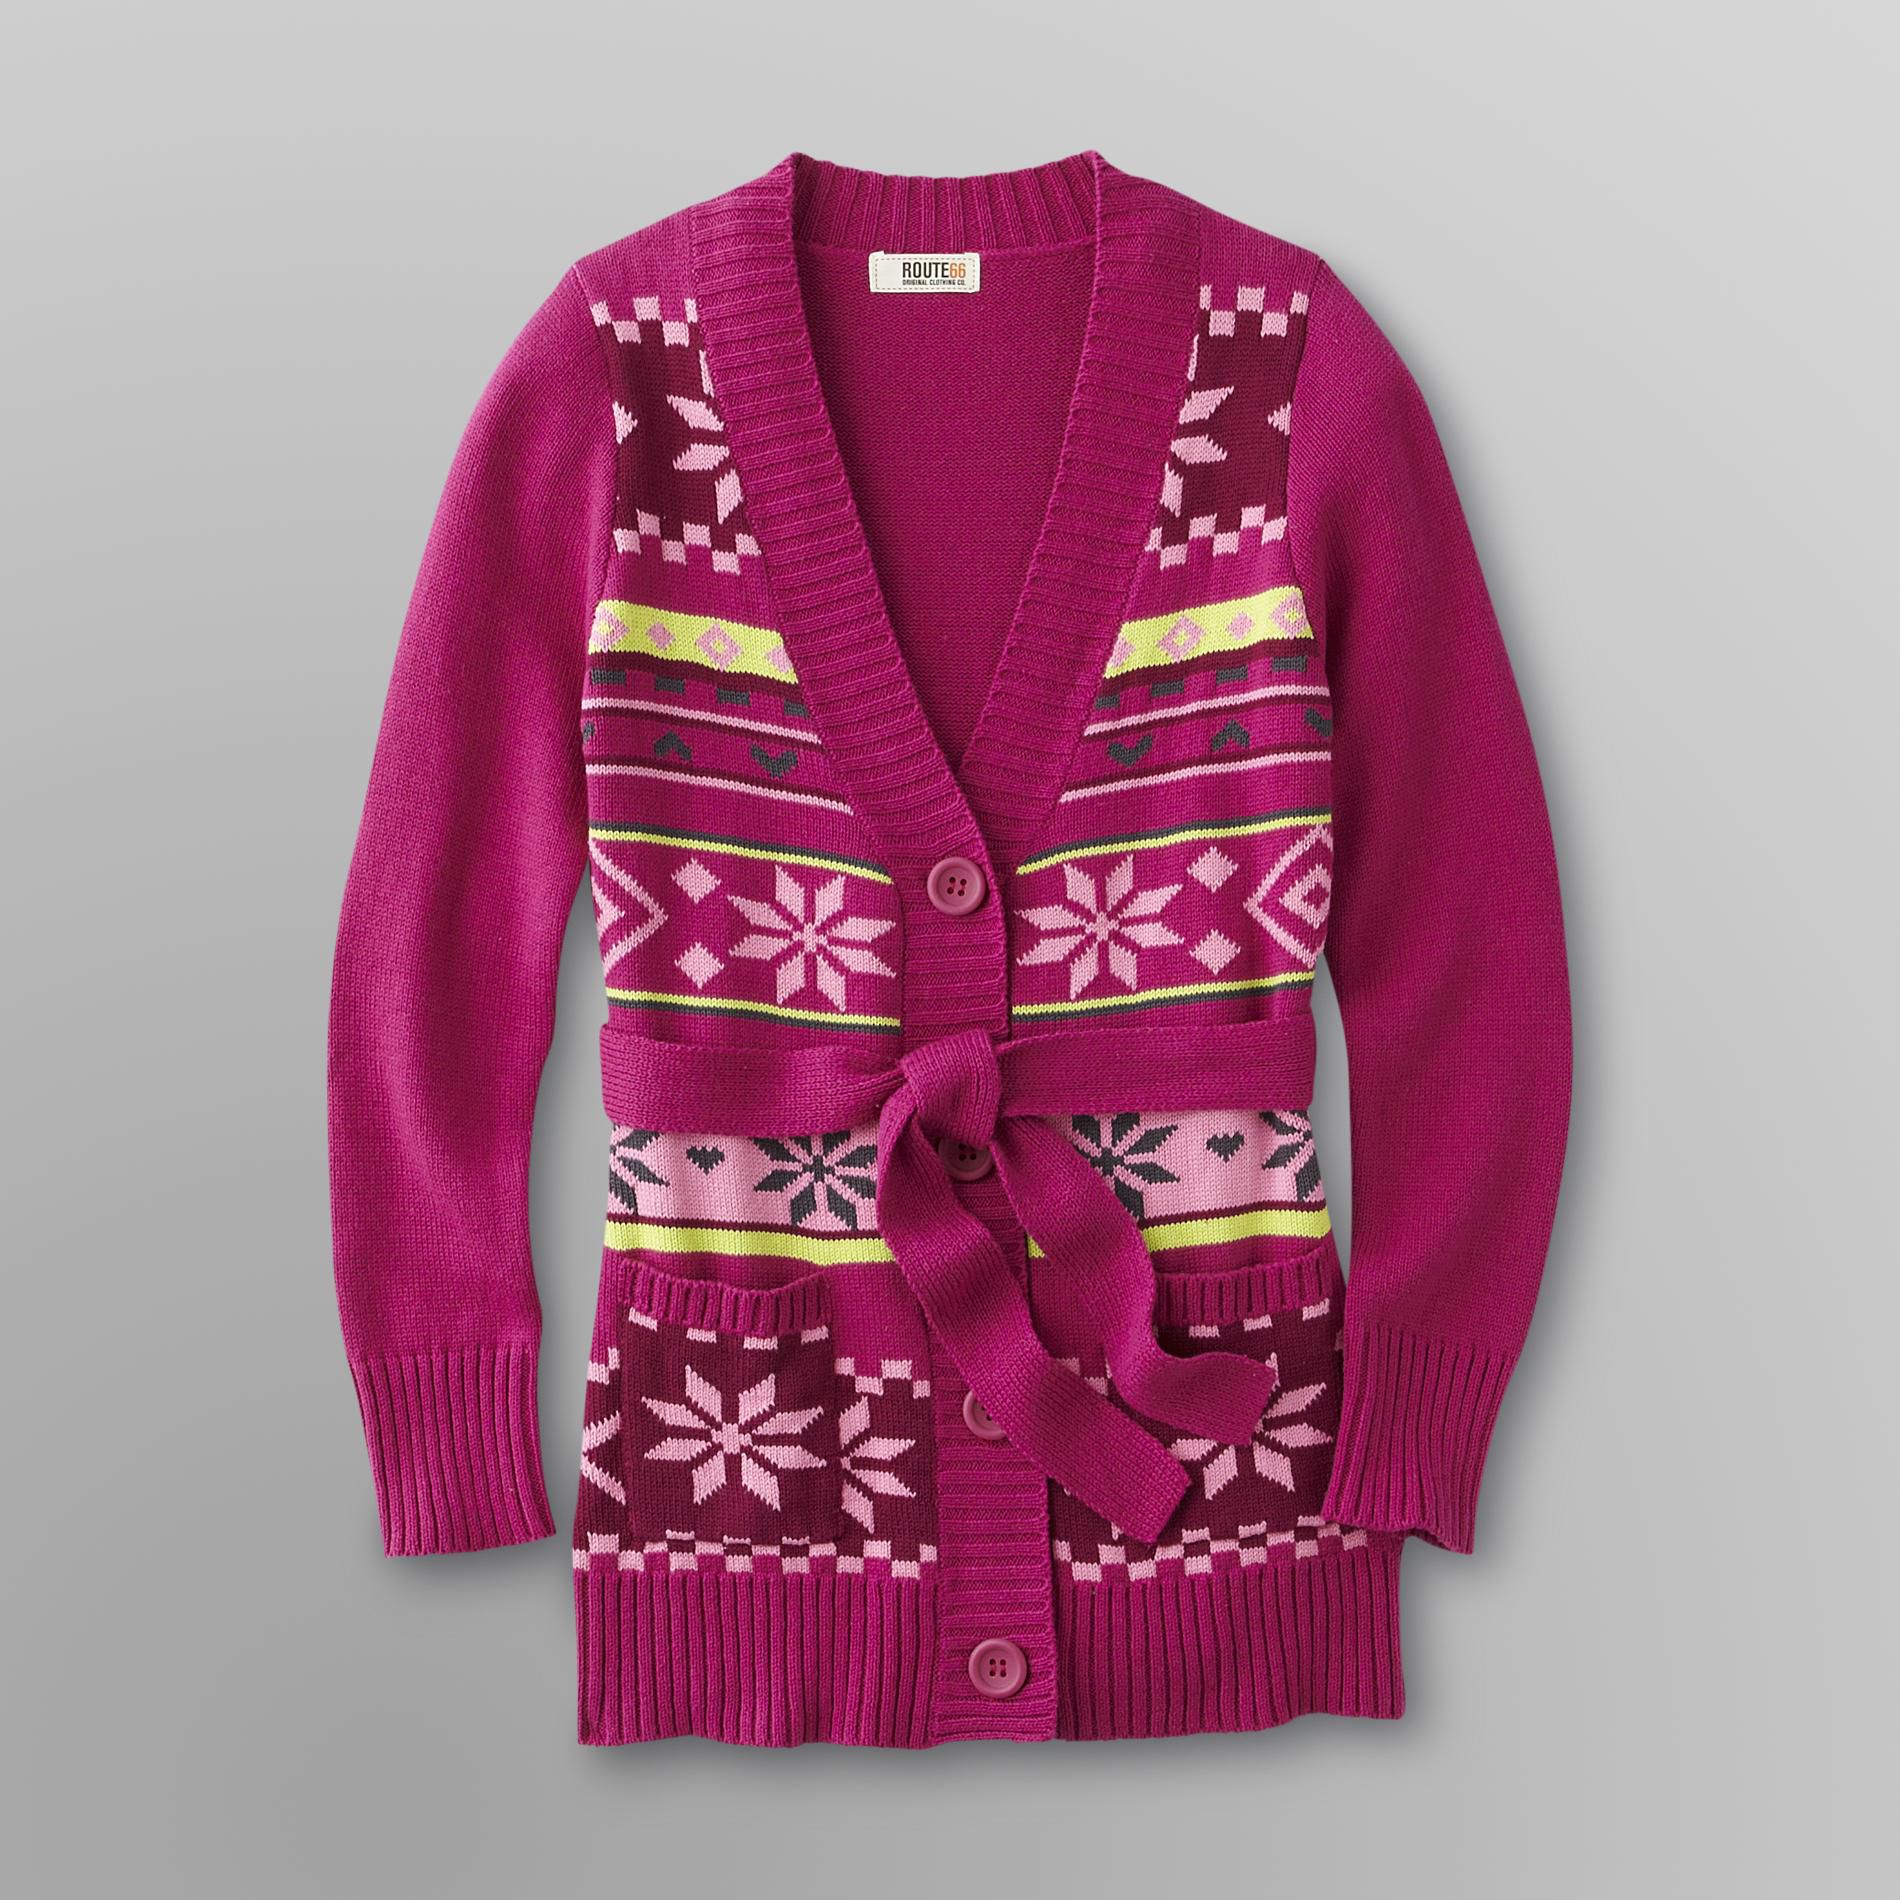 Route 66 Girl's Cardigan Sweater - Fair Isle Pattern